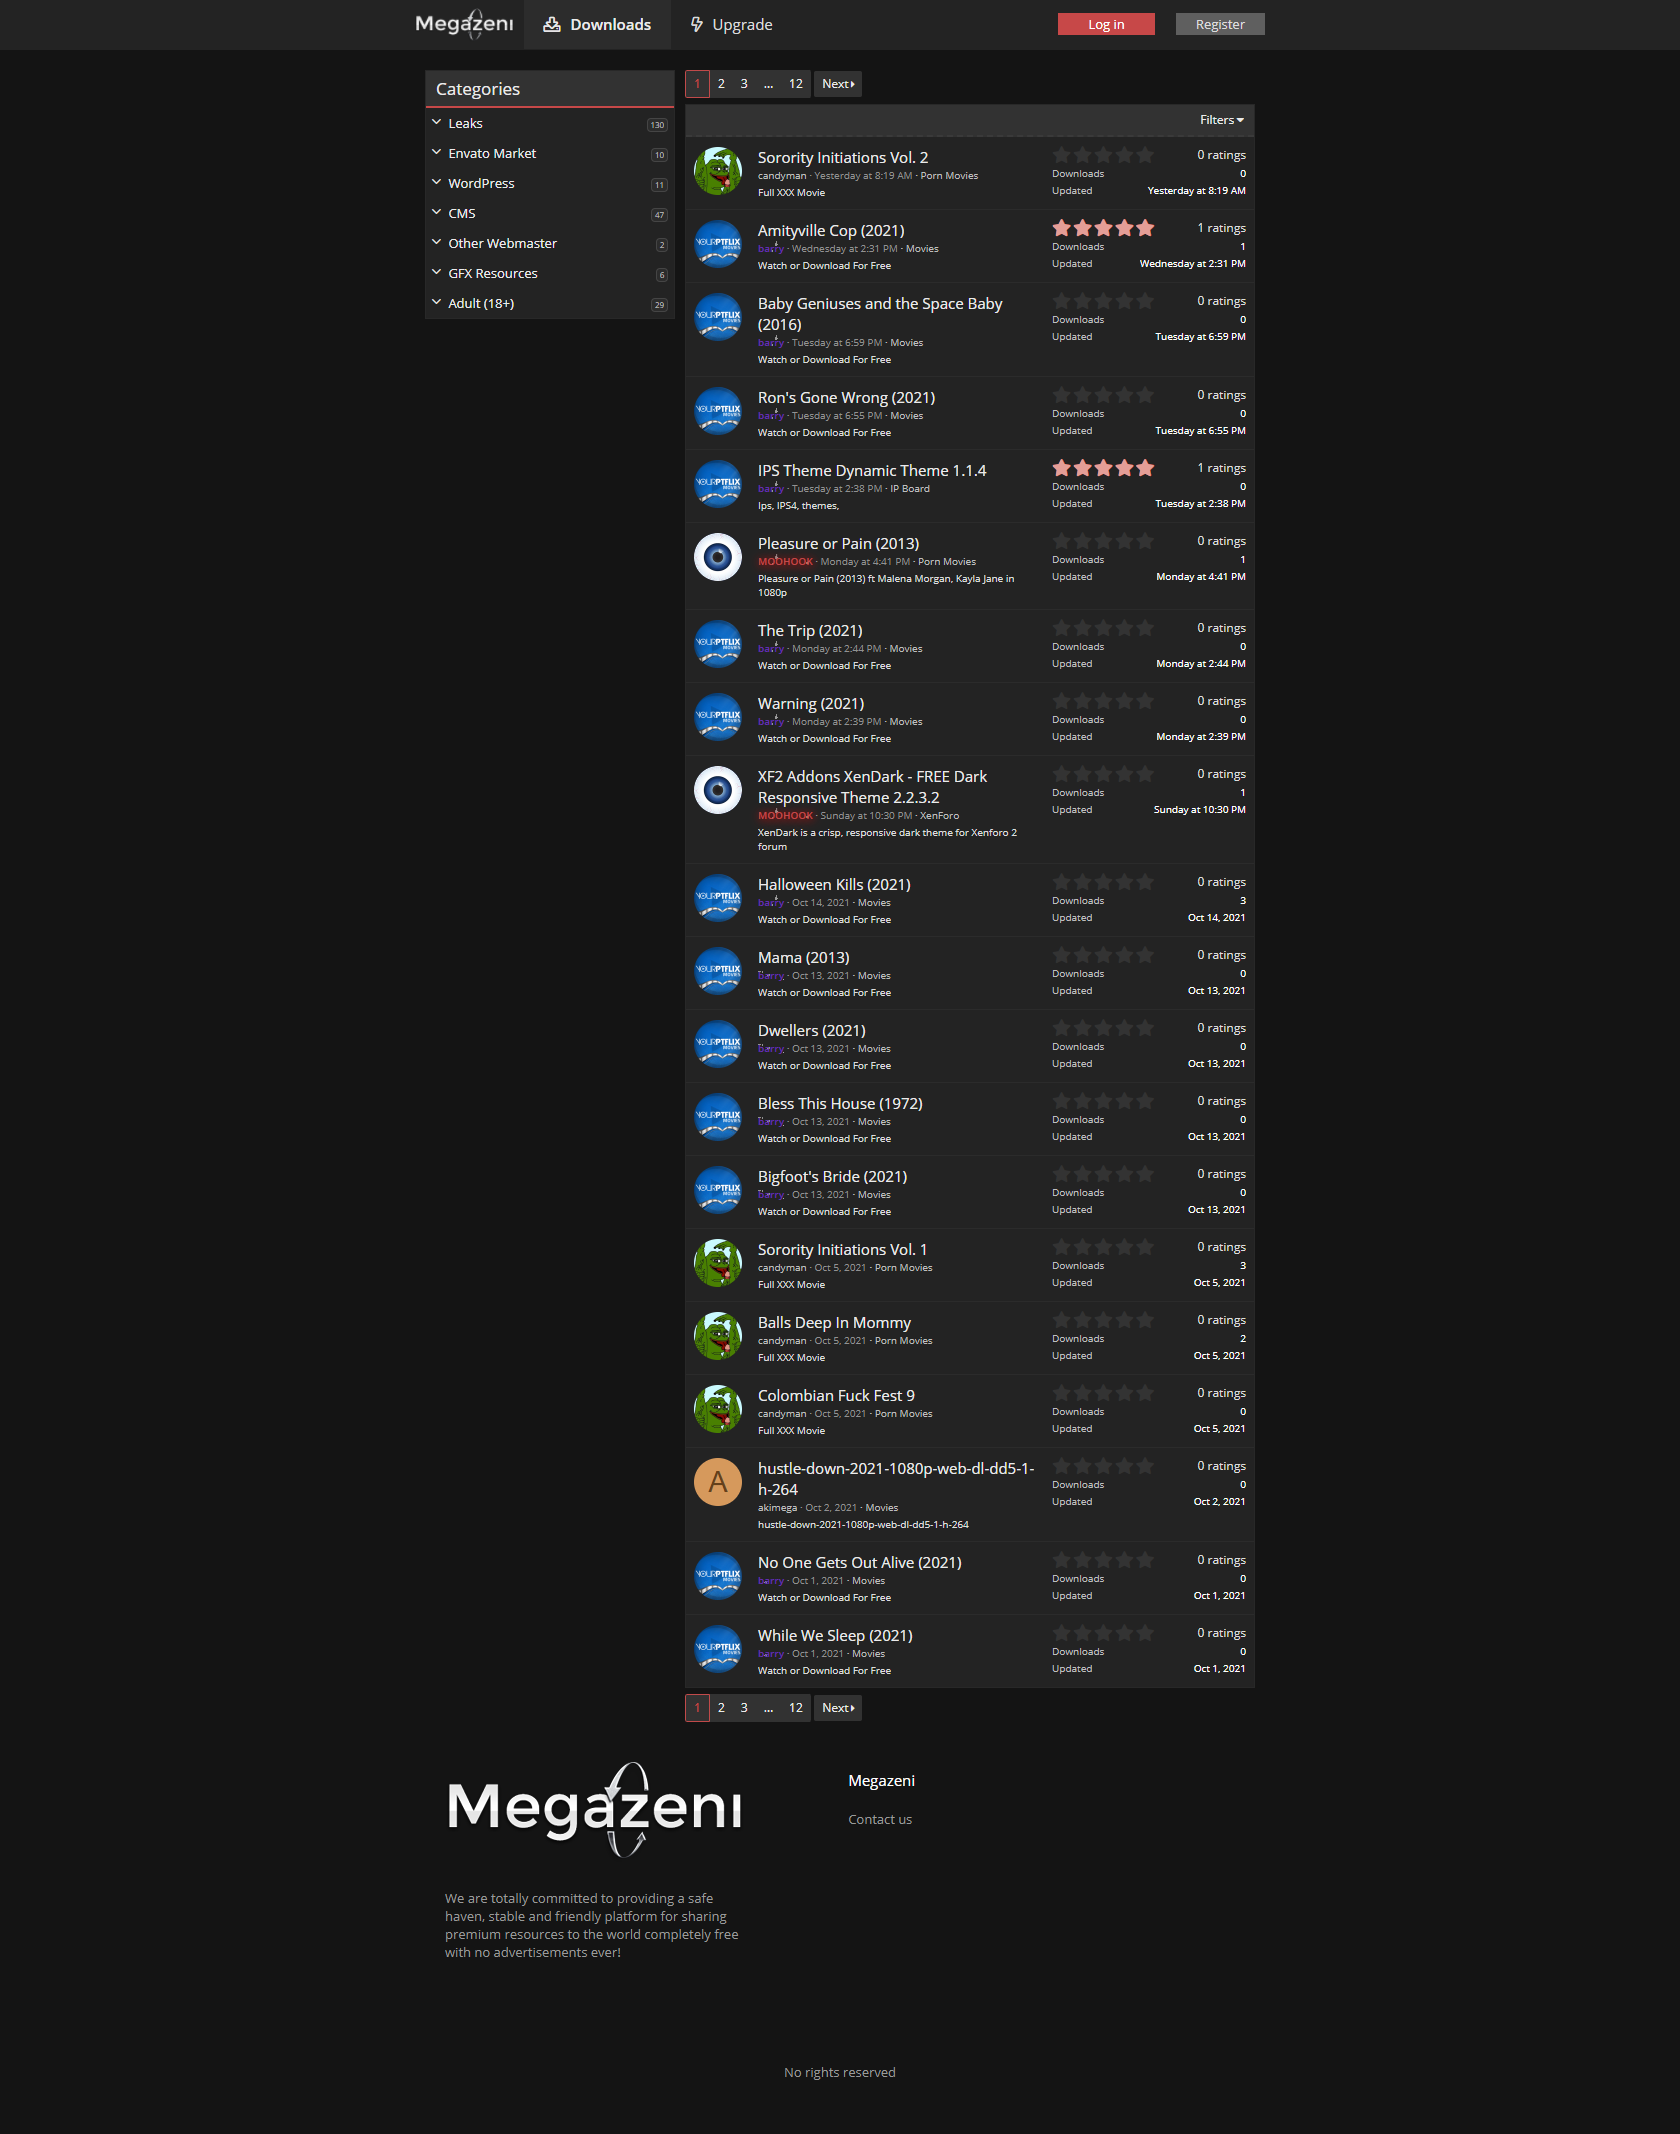 screencapture-megazeni-downloads-2021-10-22-12-43-06.png